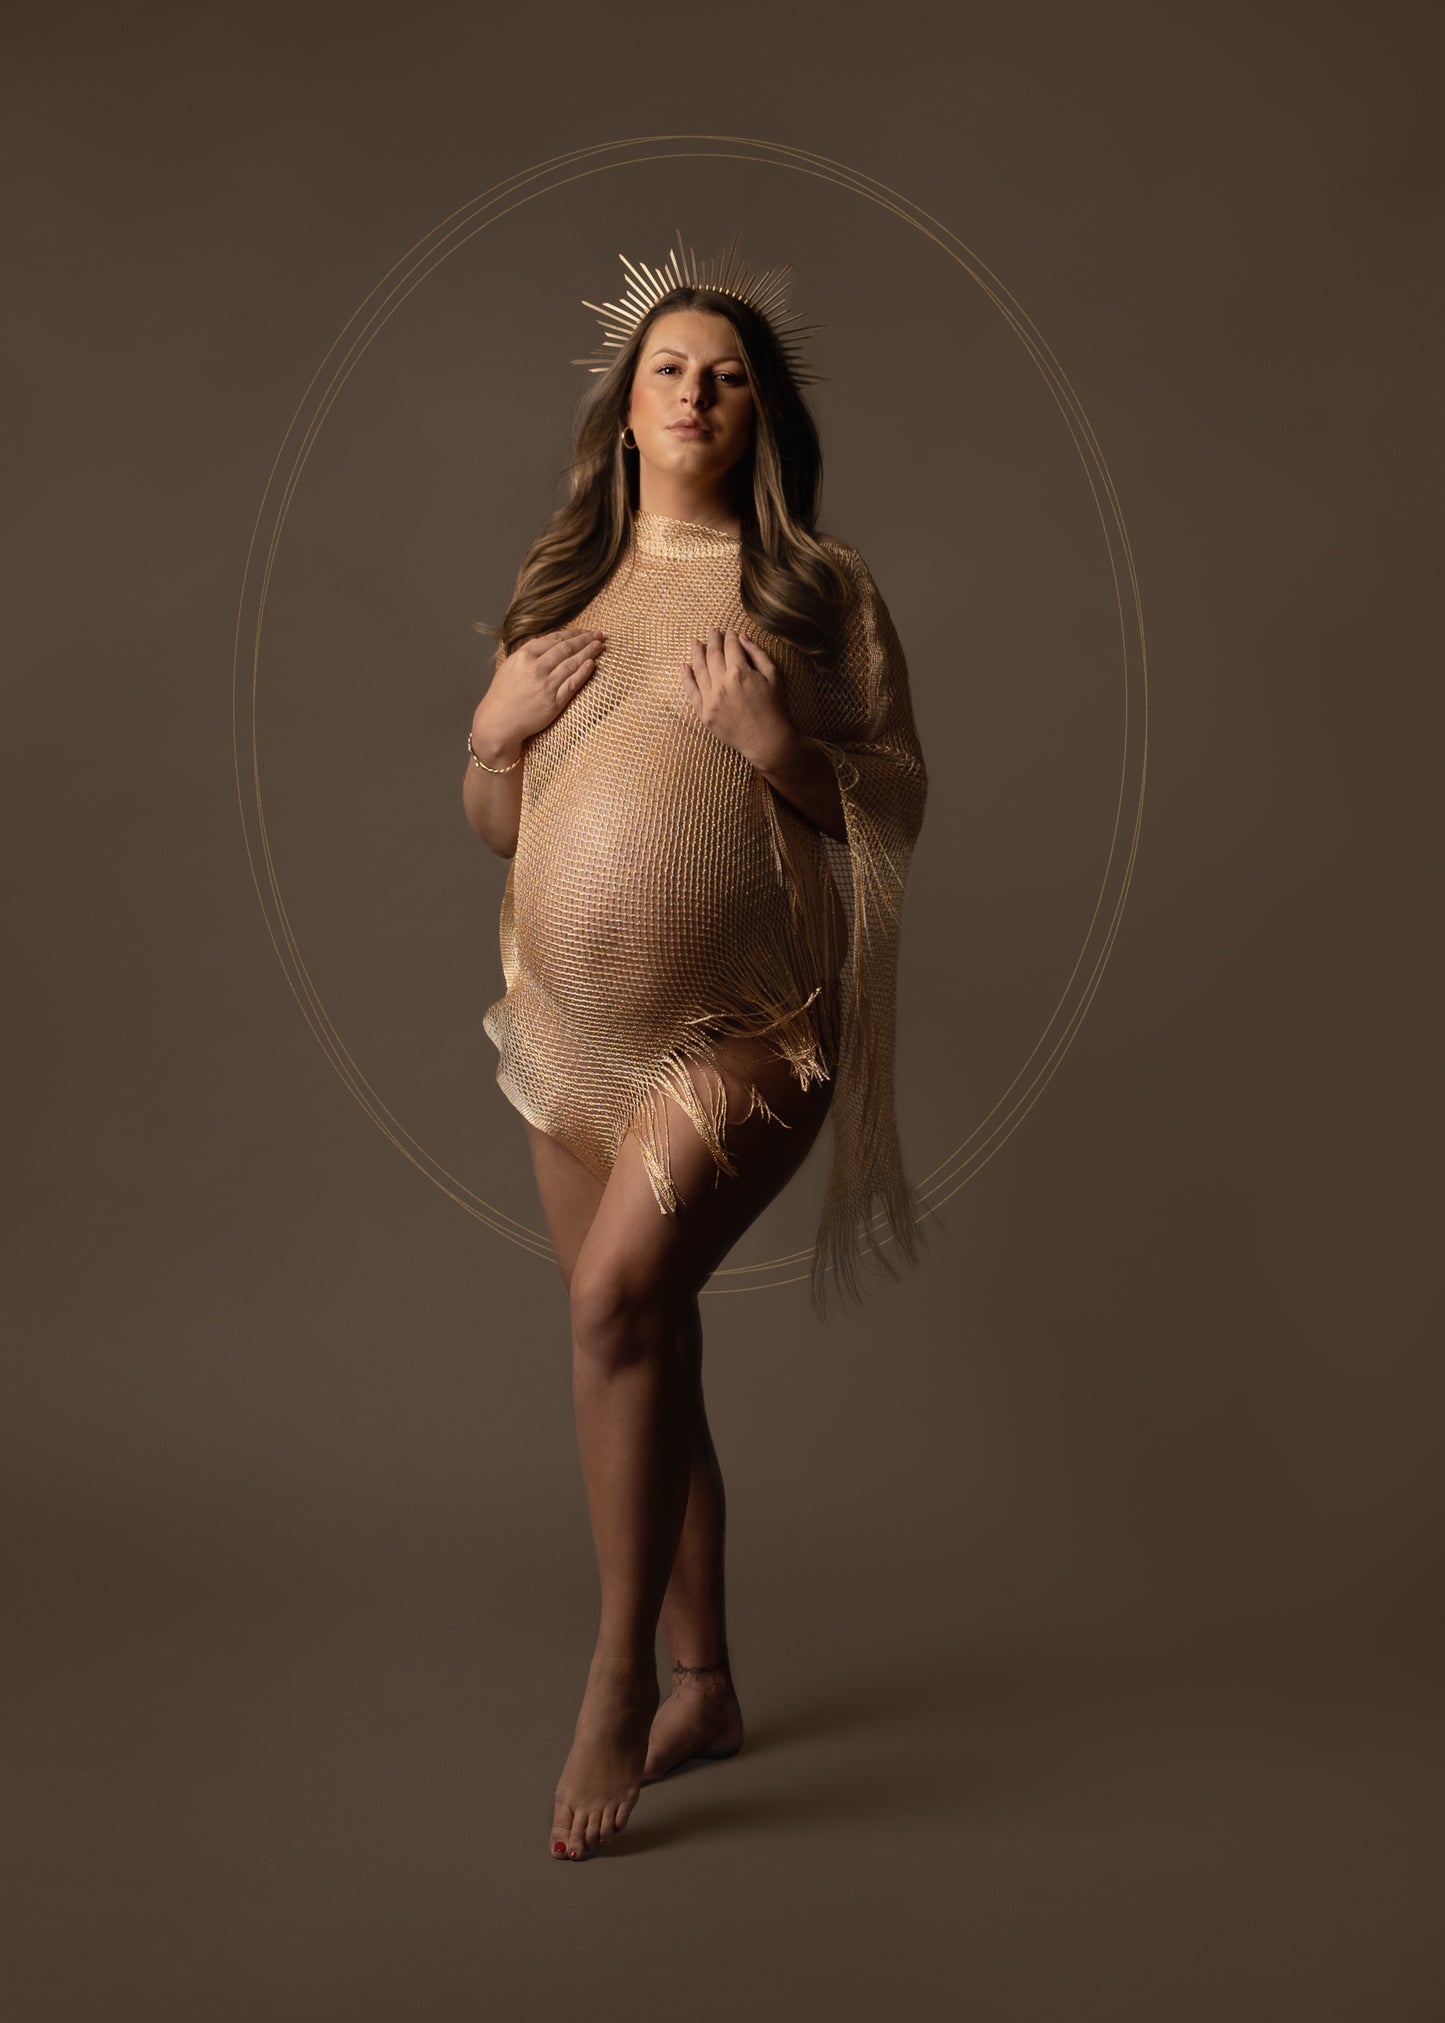 Fine Art Pregnancy Photoshoot - Maternity Photography - Baby Bump